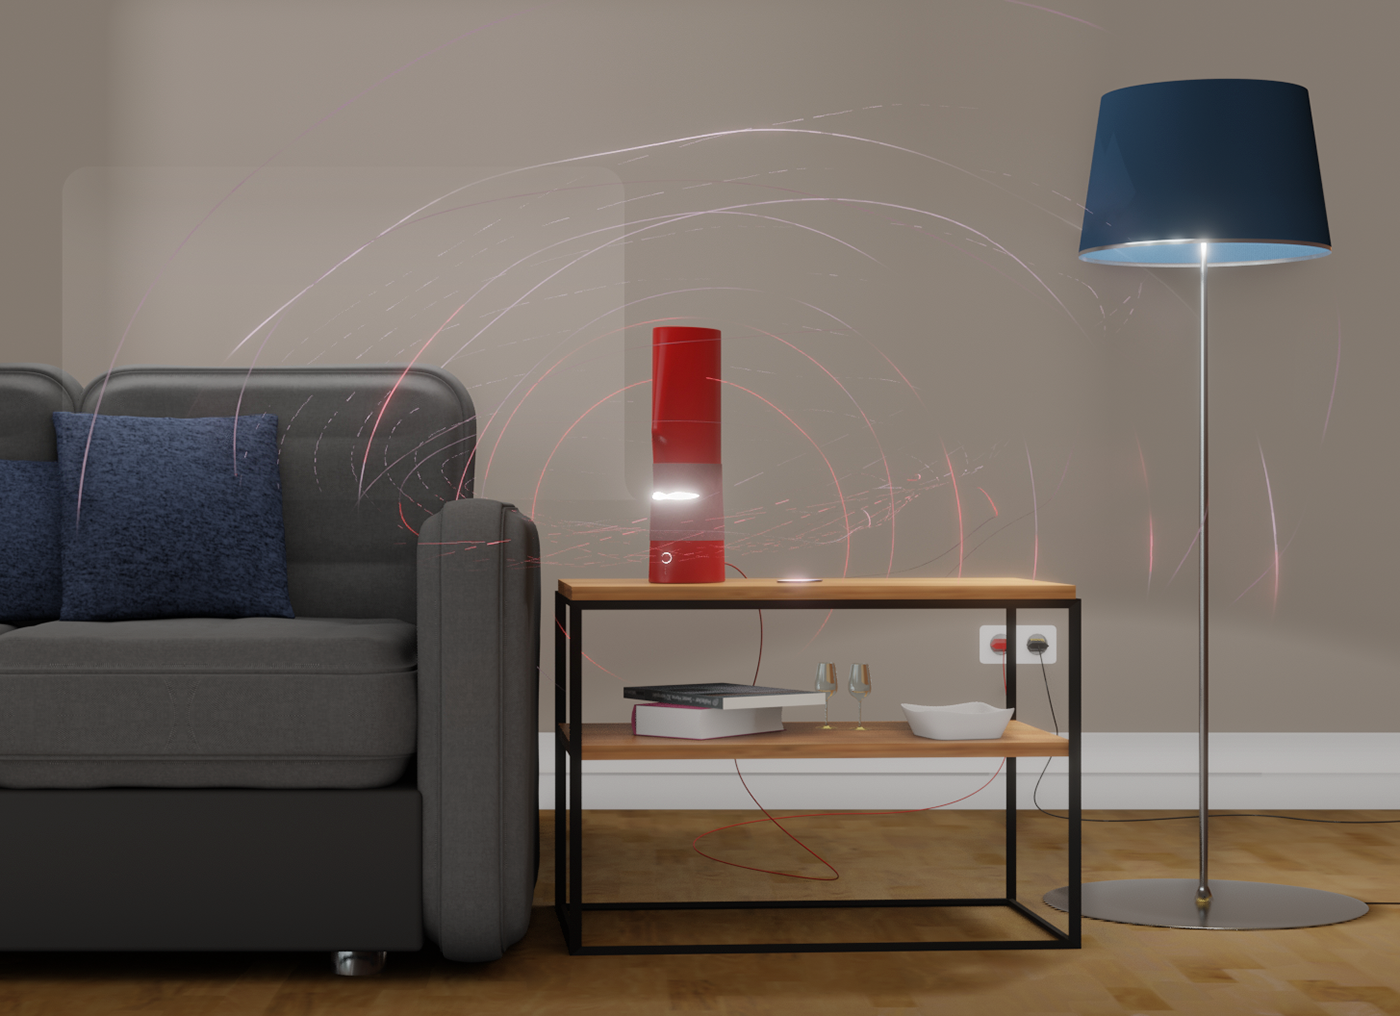 stanislav krasowski krasowski.ru Voice assistant victor Smart Speaker concept Home pod virtual assistant Siri Alexa